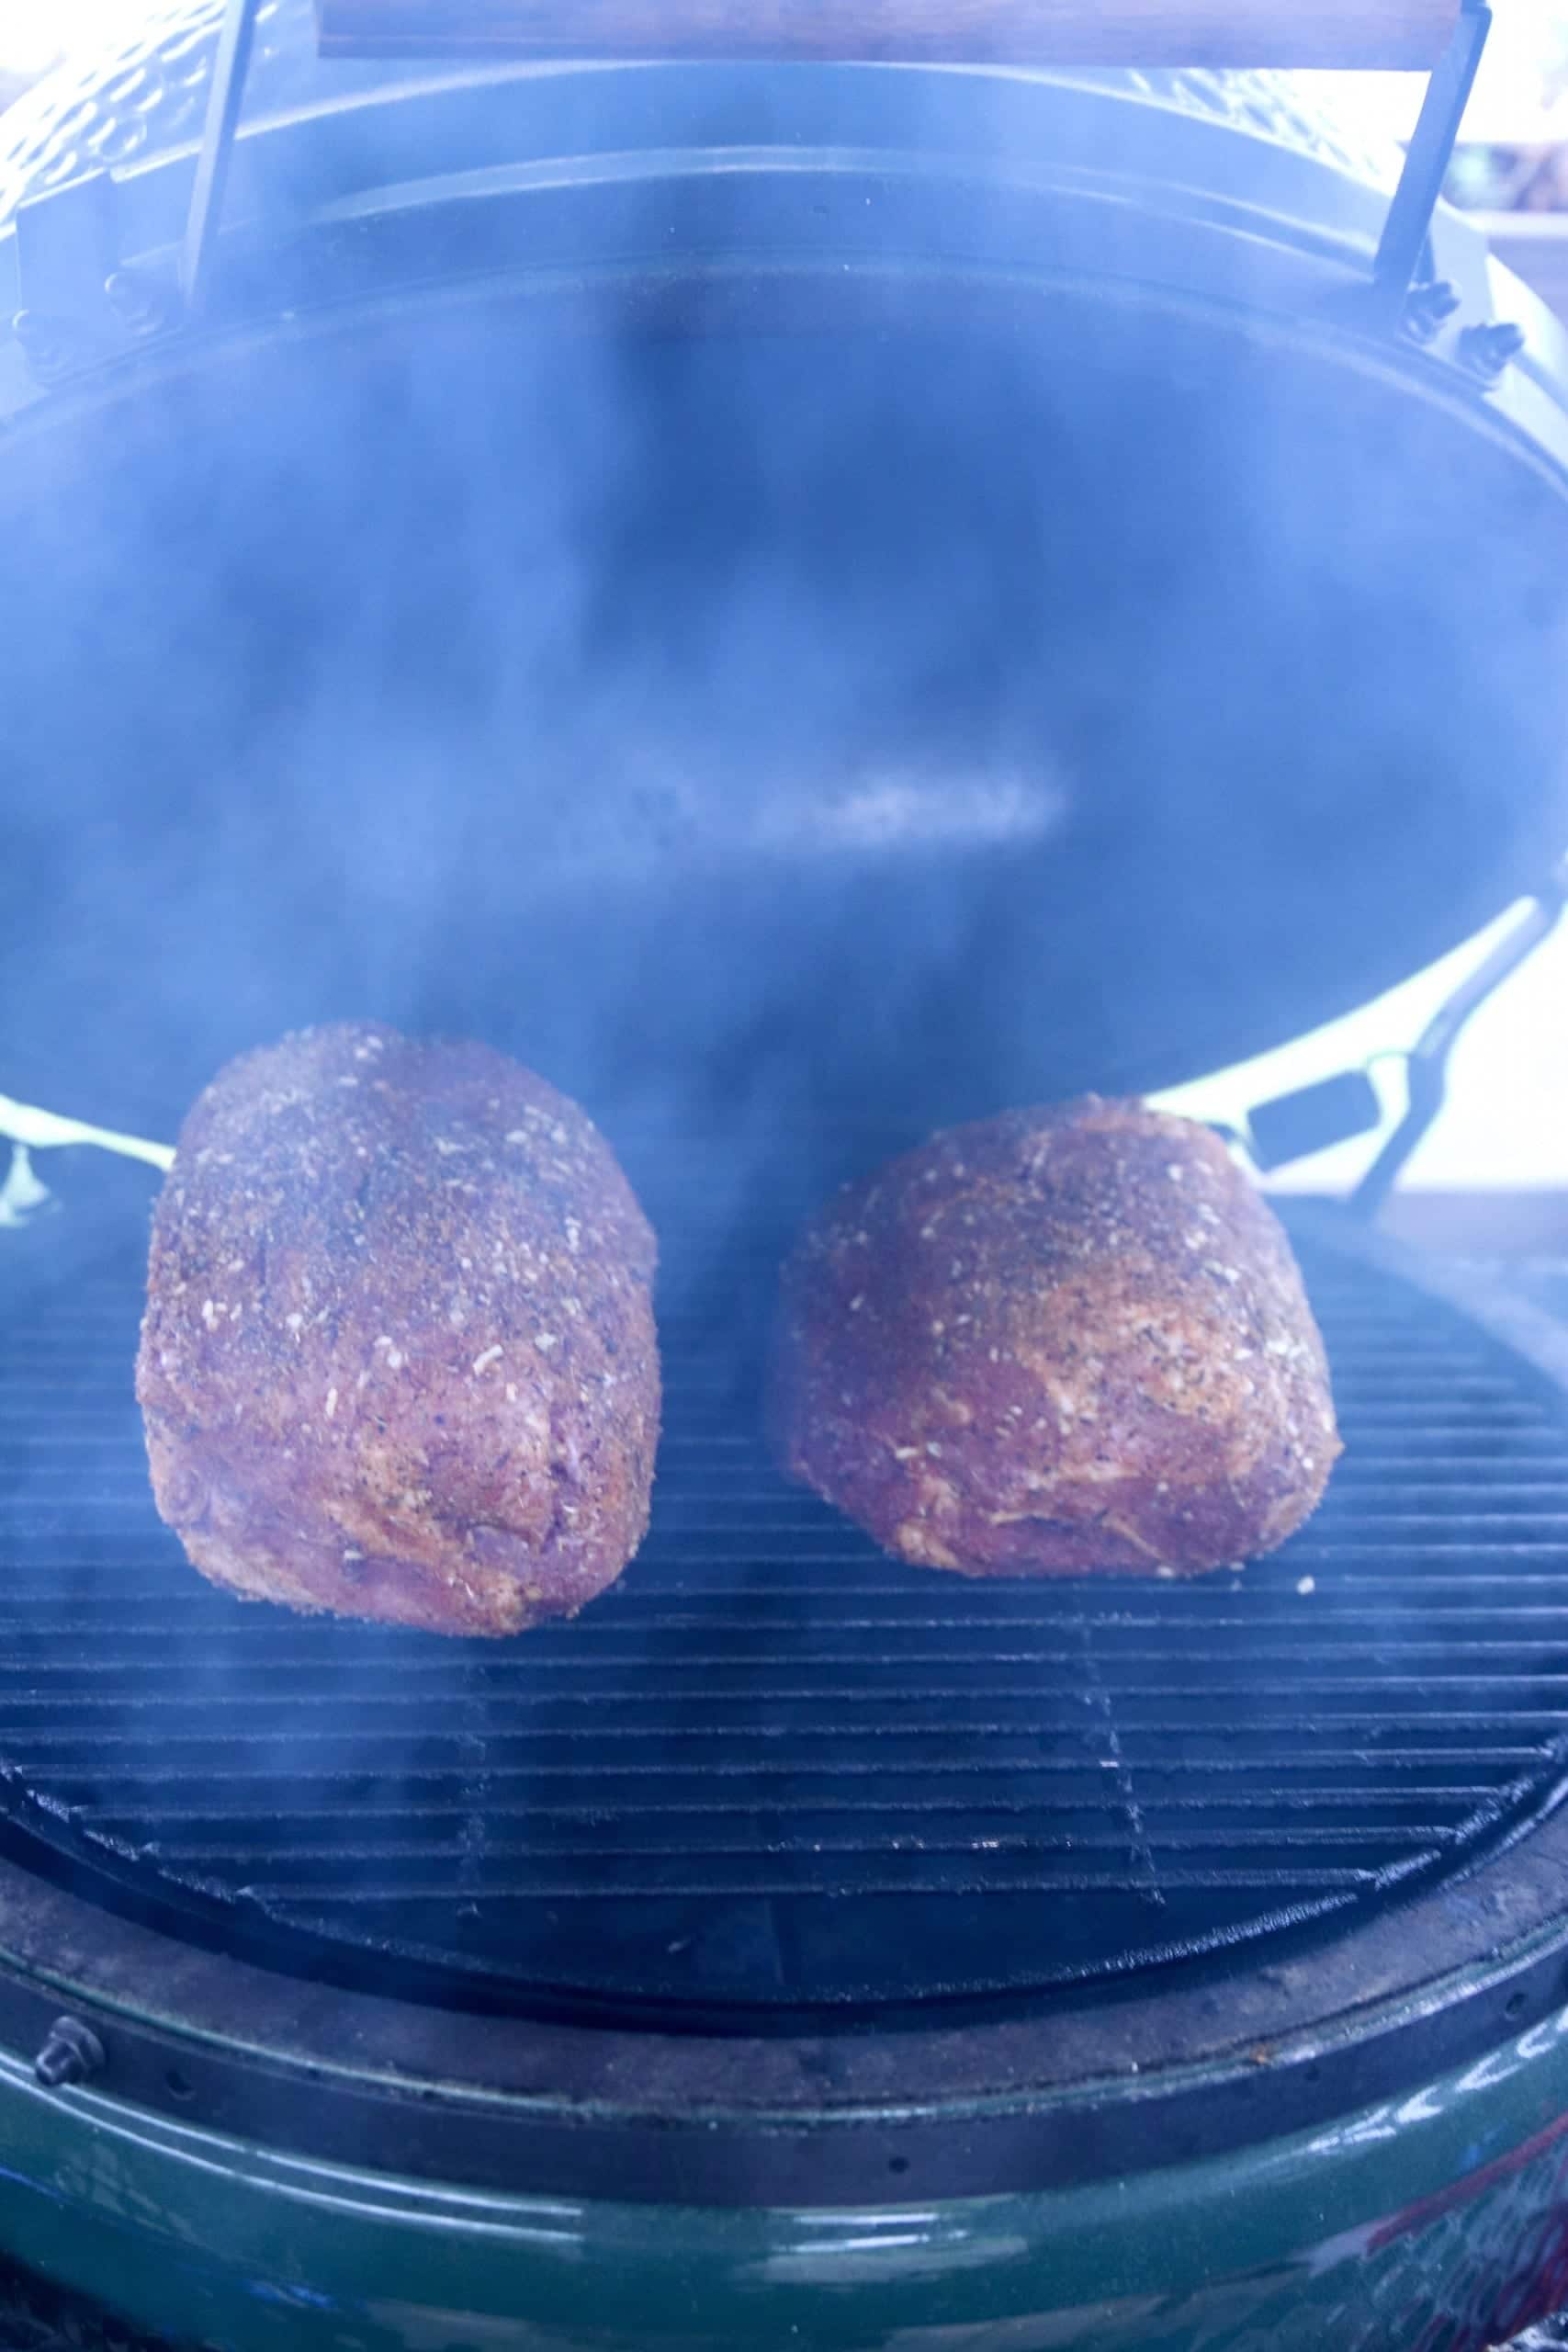 smoking pork shoulder on a grill